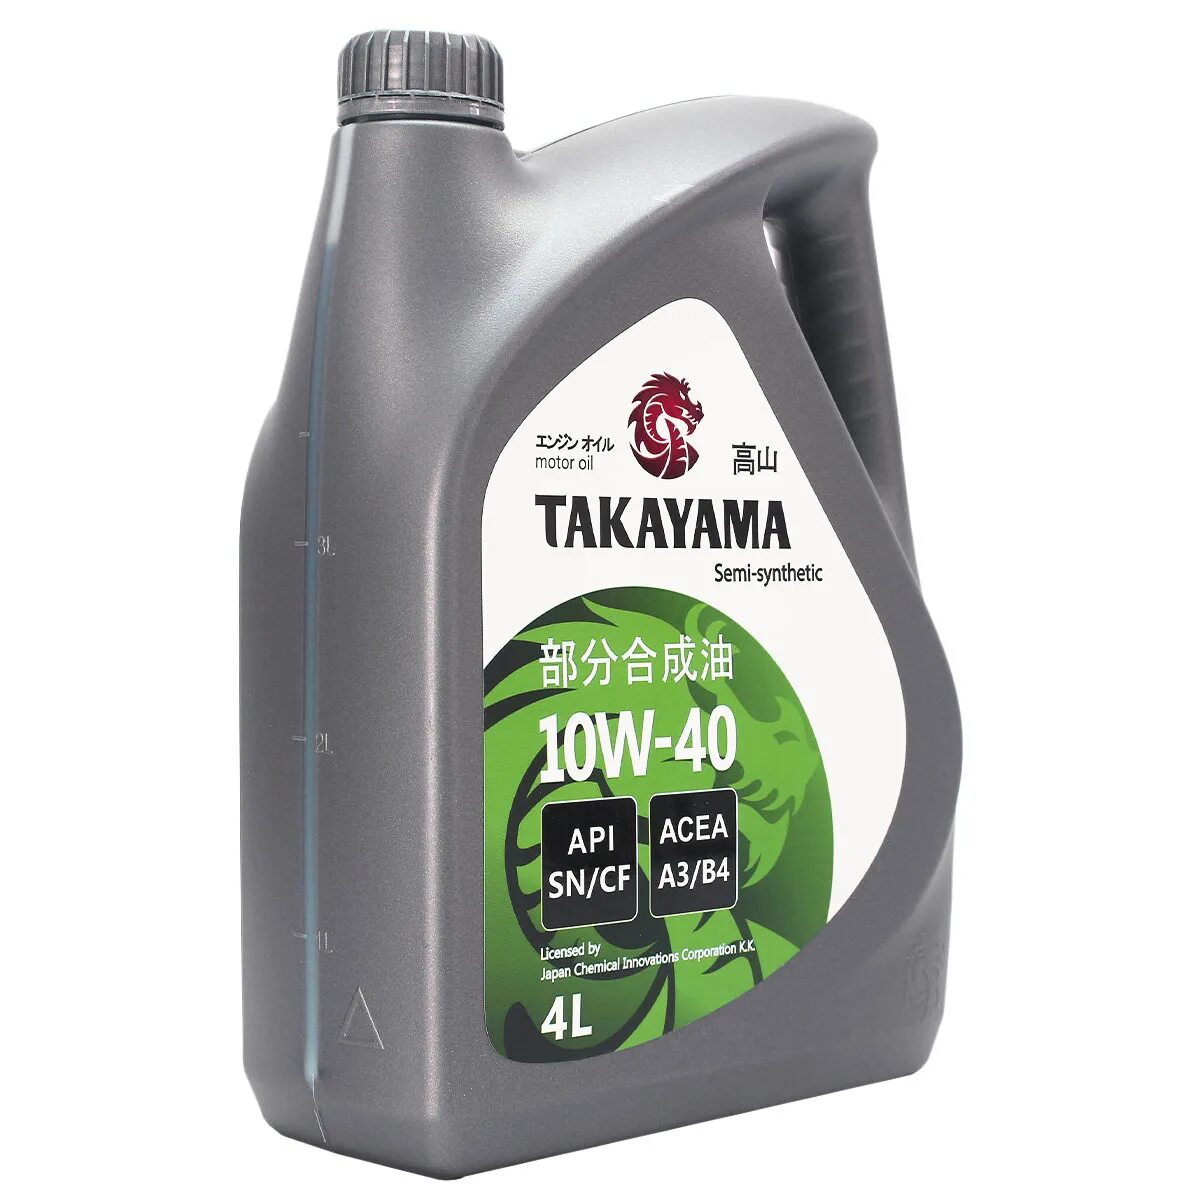 Масло моторное Takayama 10w-40 API SN/CF 4л (пластик). Масло Такаяма 10w 40 отзывы. Takayama 10w 40 полусинтетика отзывы. Масло такаяма 10w 40